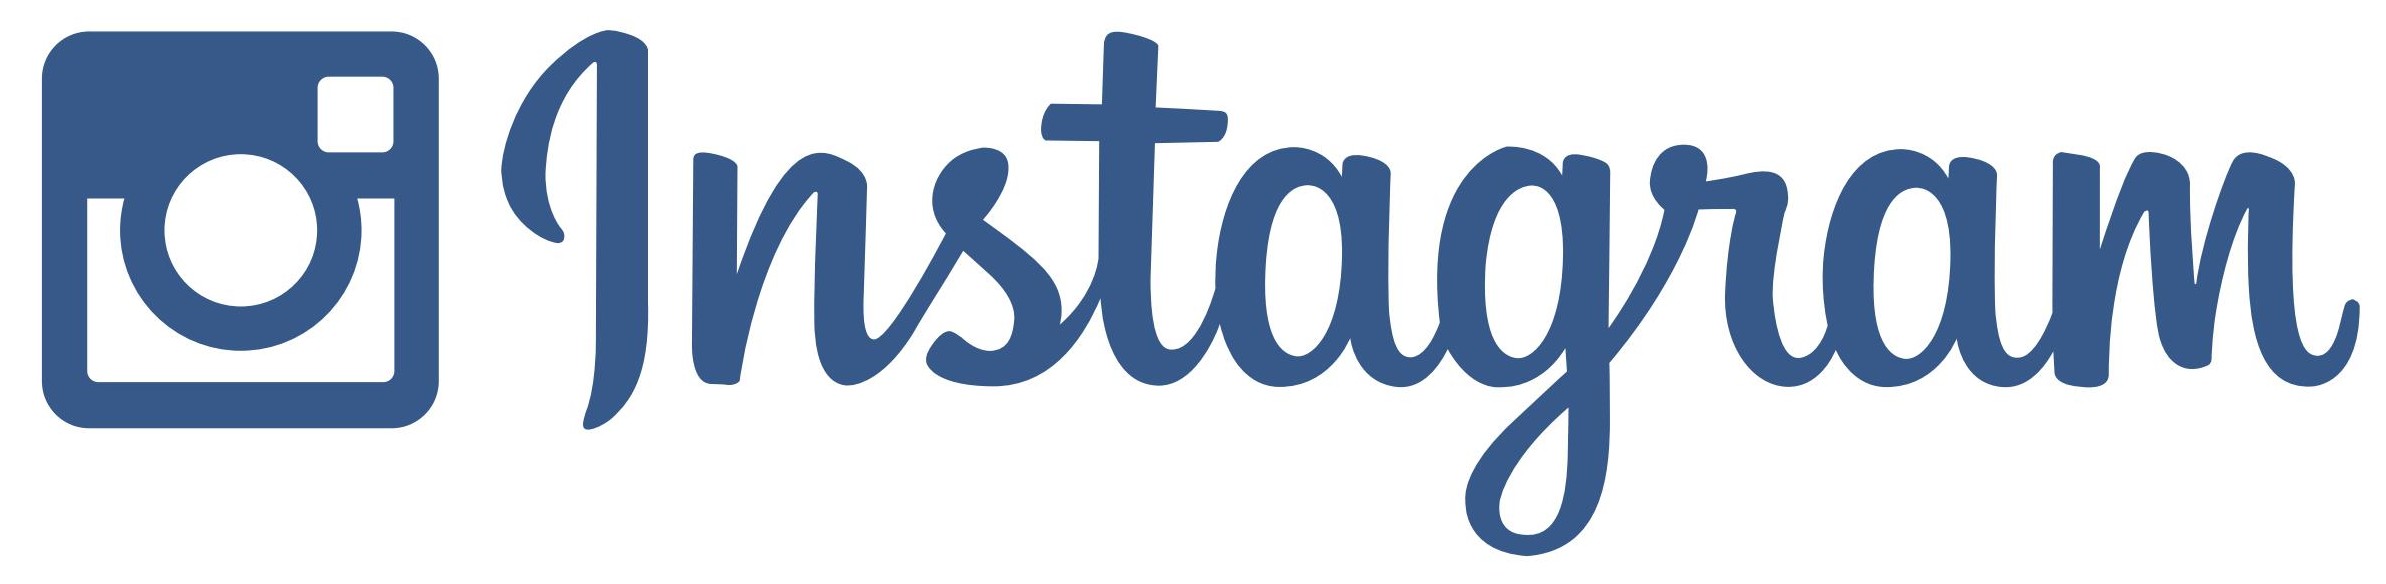 Instagram-New-Logo